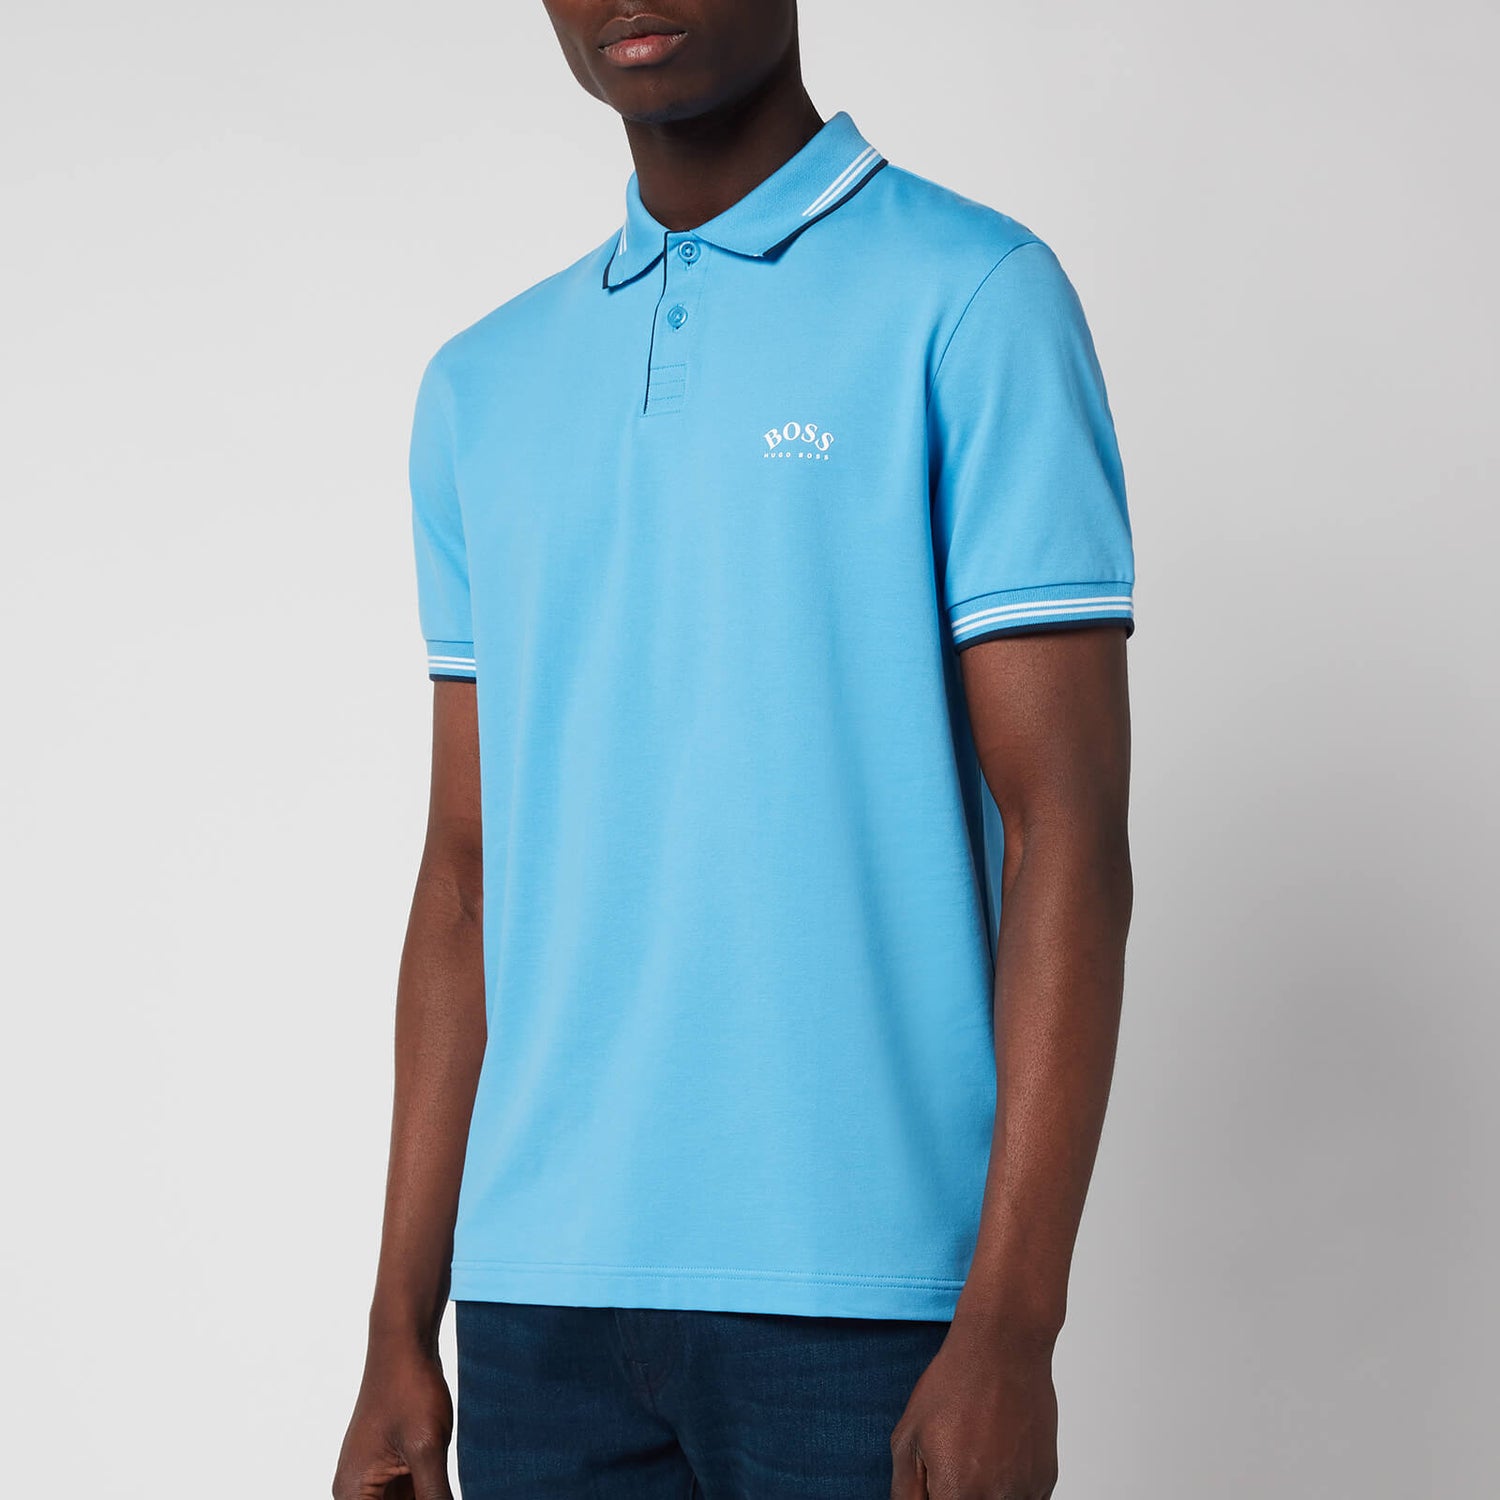 BOSS Athleisure Men's Paul Curved Polo Shirt - Open Blue